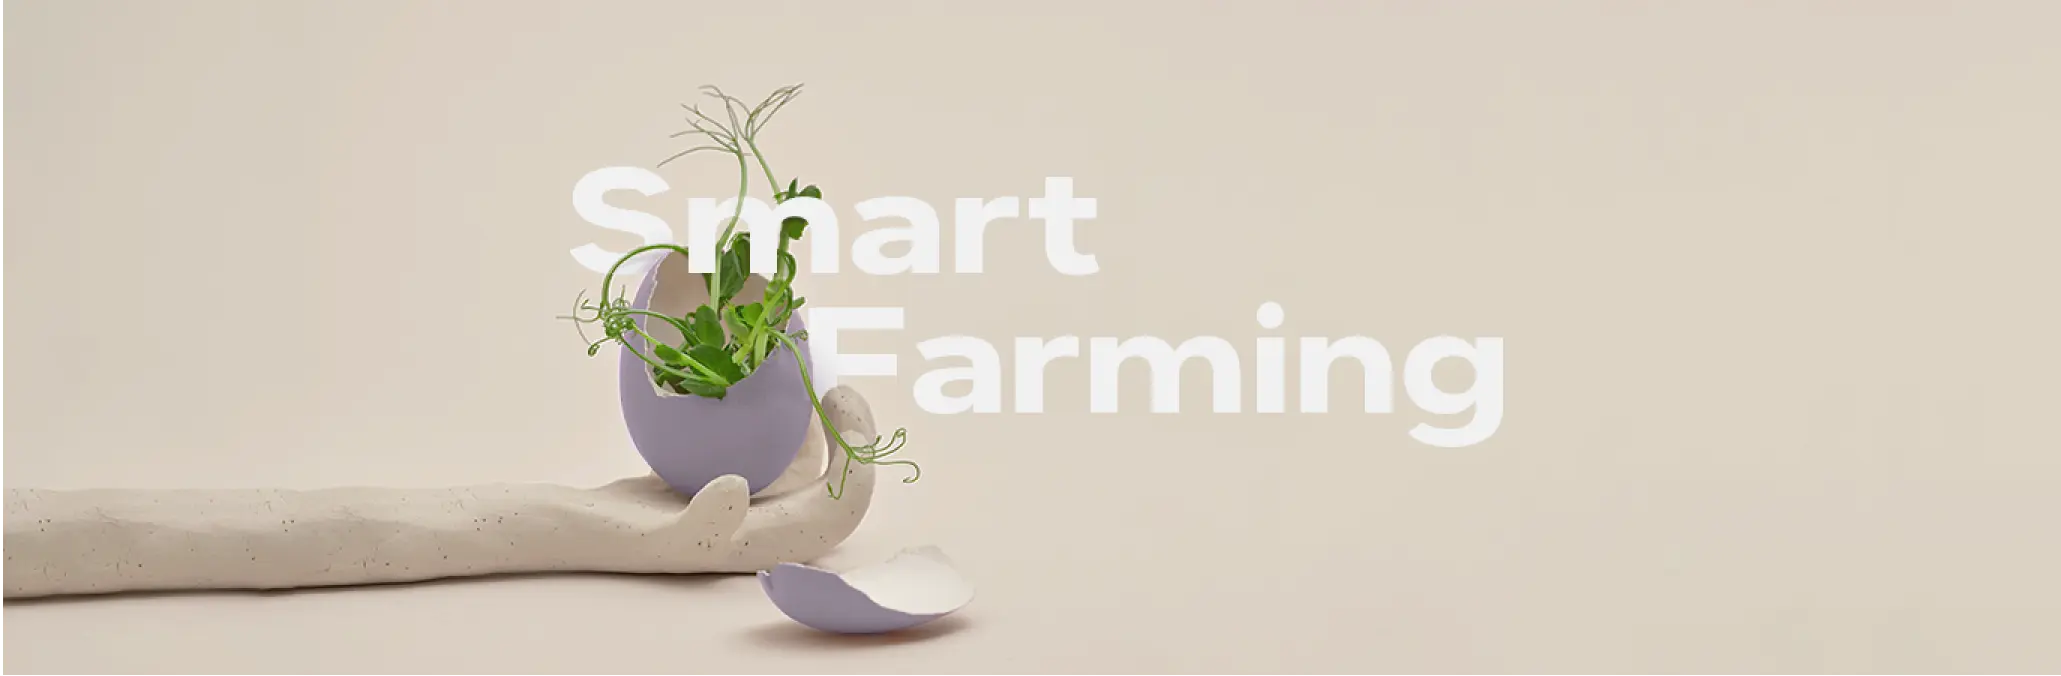 smart-farming-agricultural